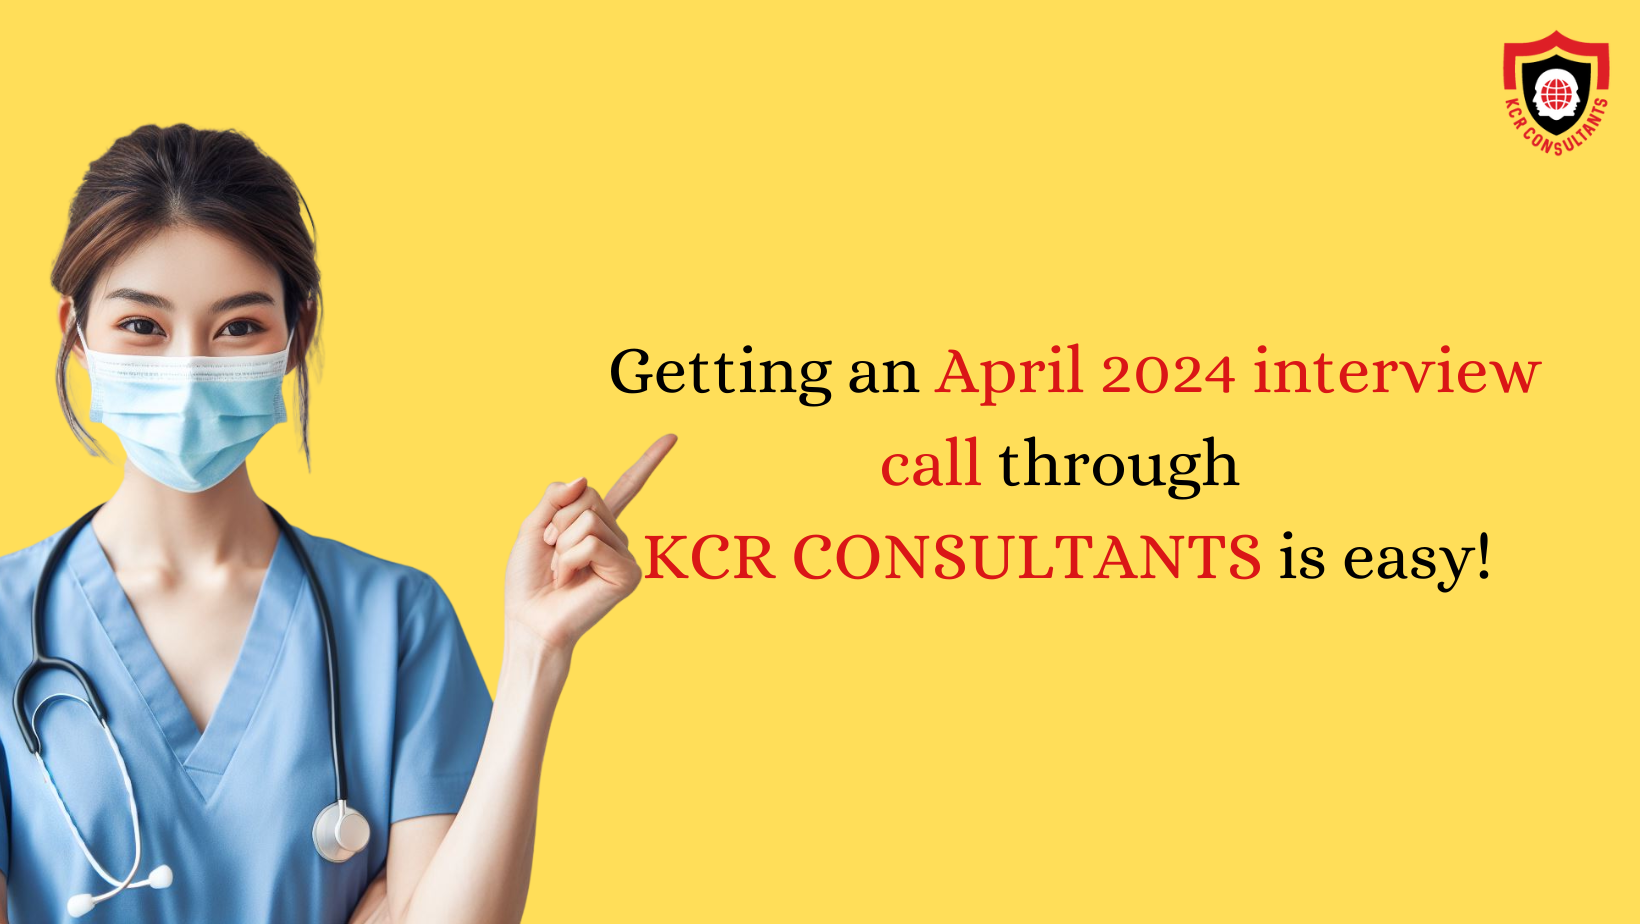 Ausbildung Nursing - KCR CONSULTANTS - Introduction